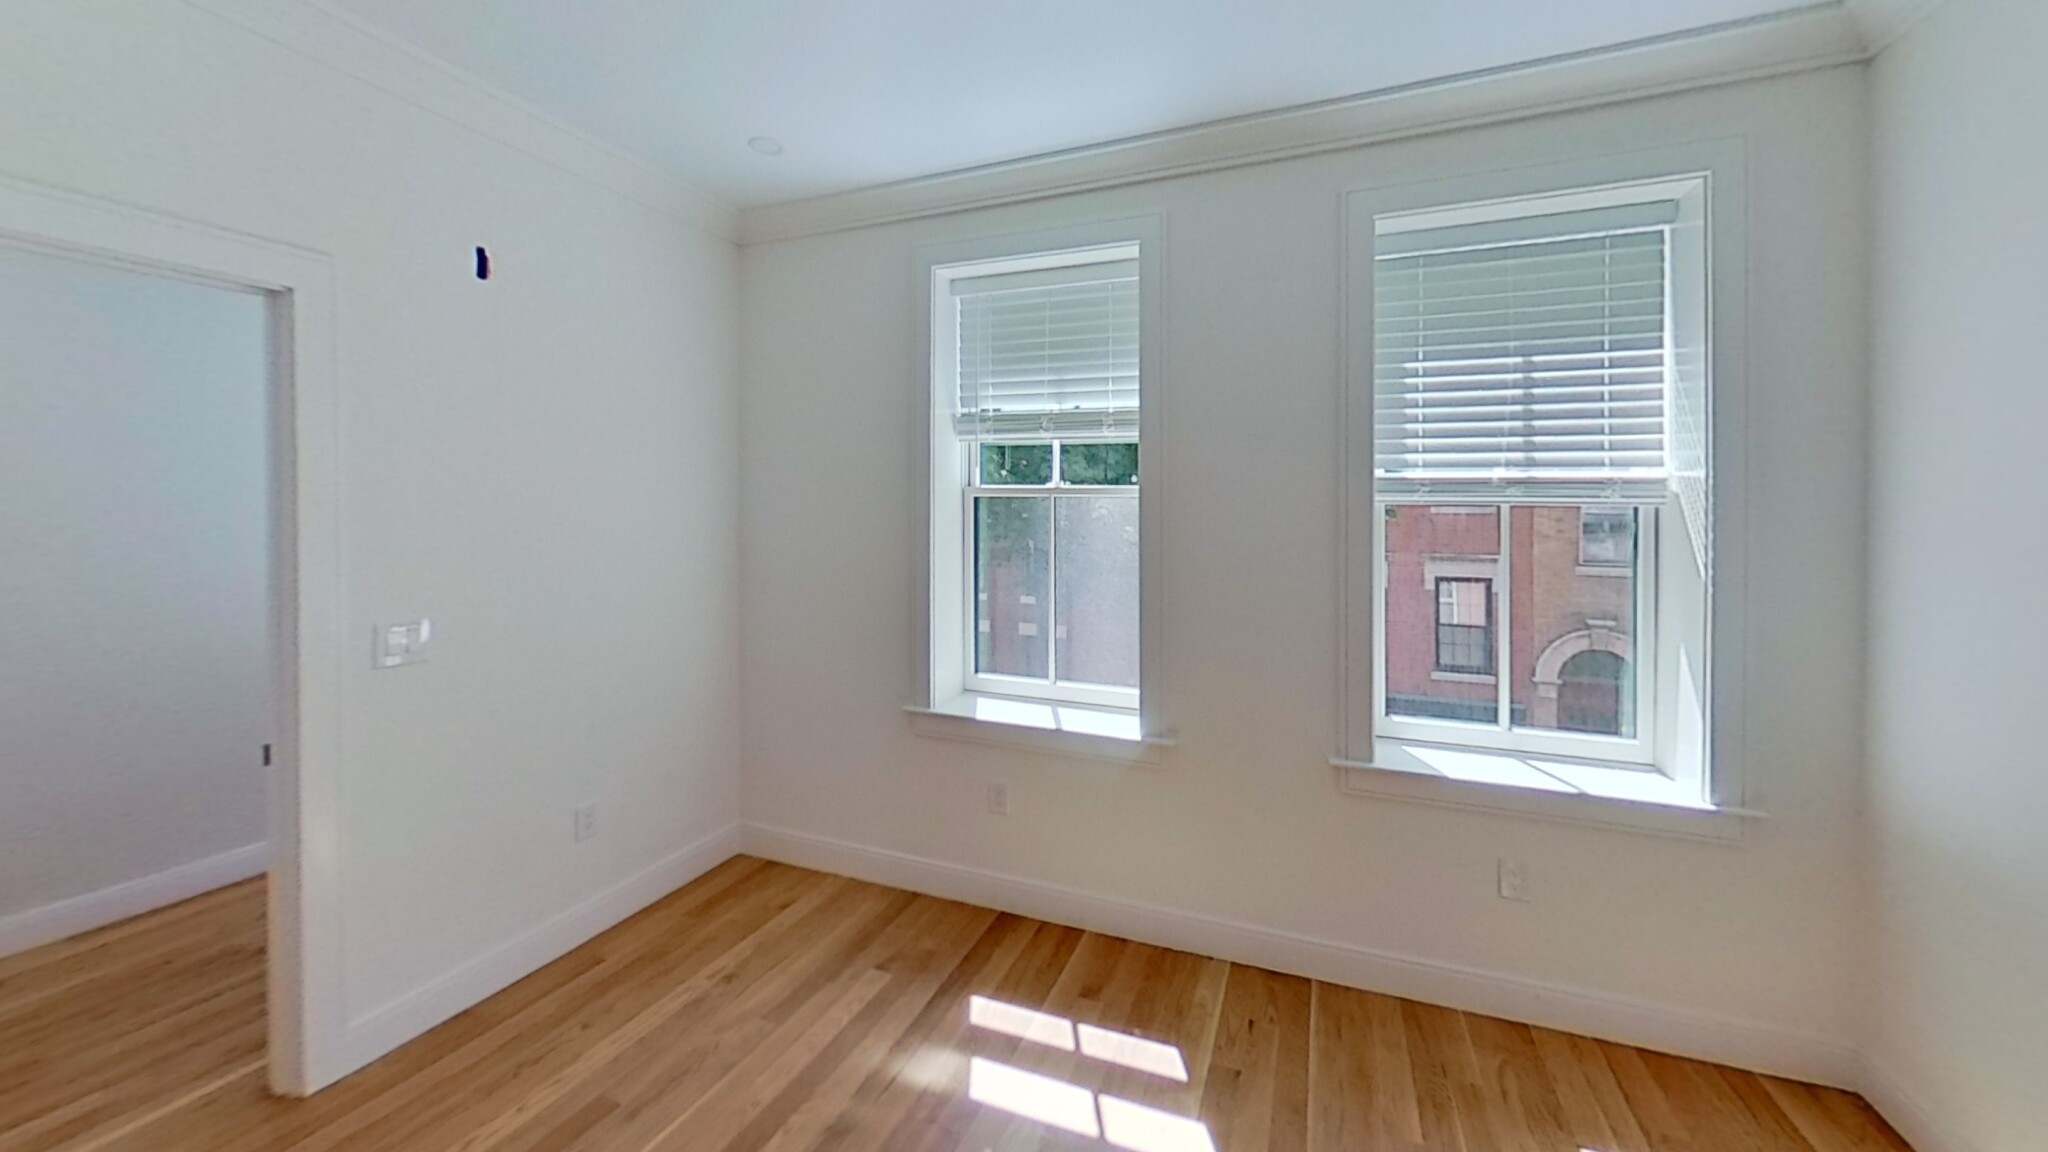 Photos of apartment on Grove St.,Boston MA 02114